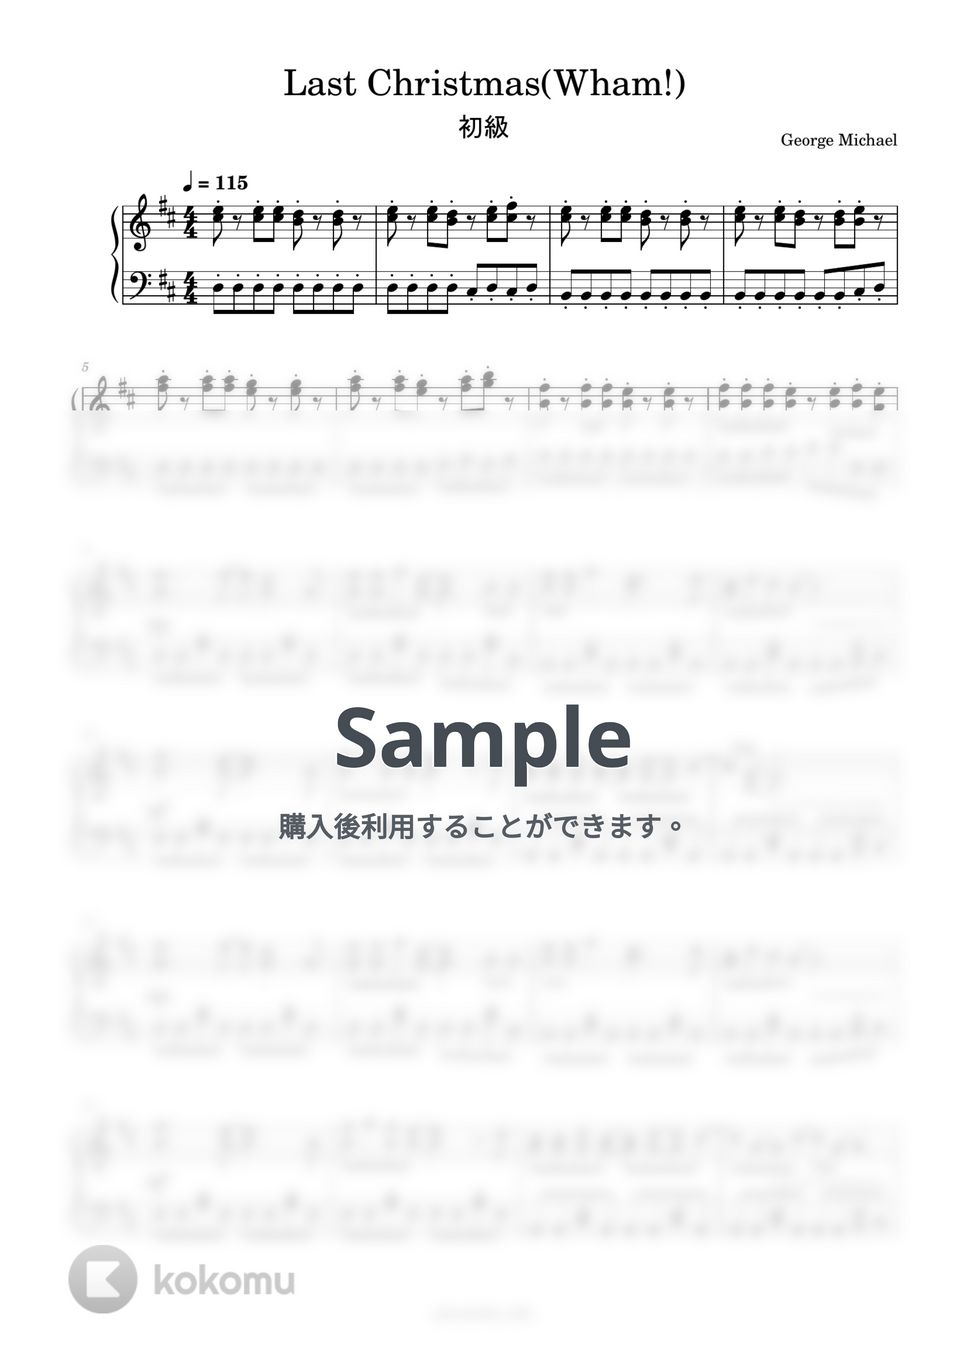 Wham! - Last Christmas (簡単楽譜) by ピアノ塾